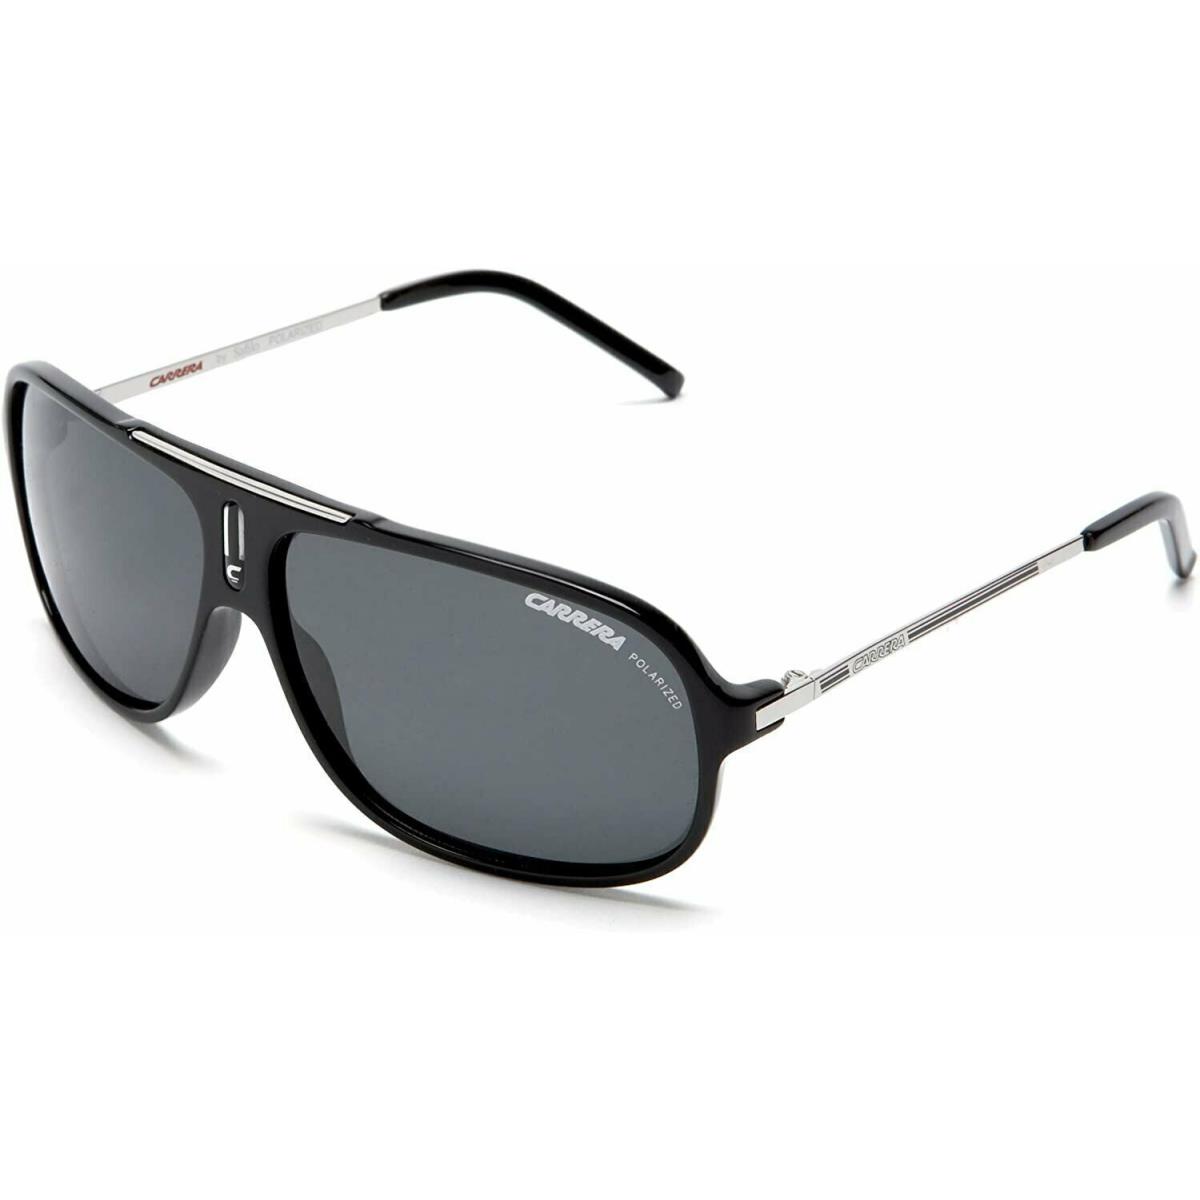 Carrera Cool Csa RA Sunglasses Black Palladium Frame Grey Polarized Lens 65mm